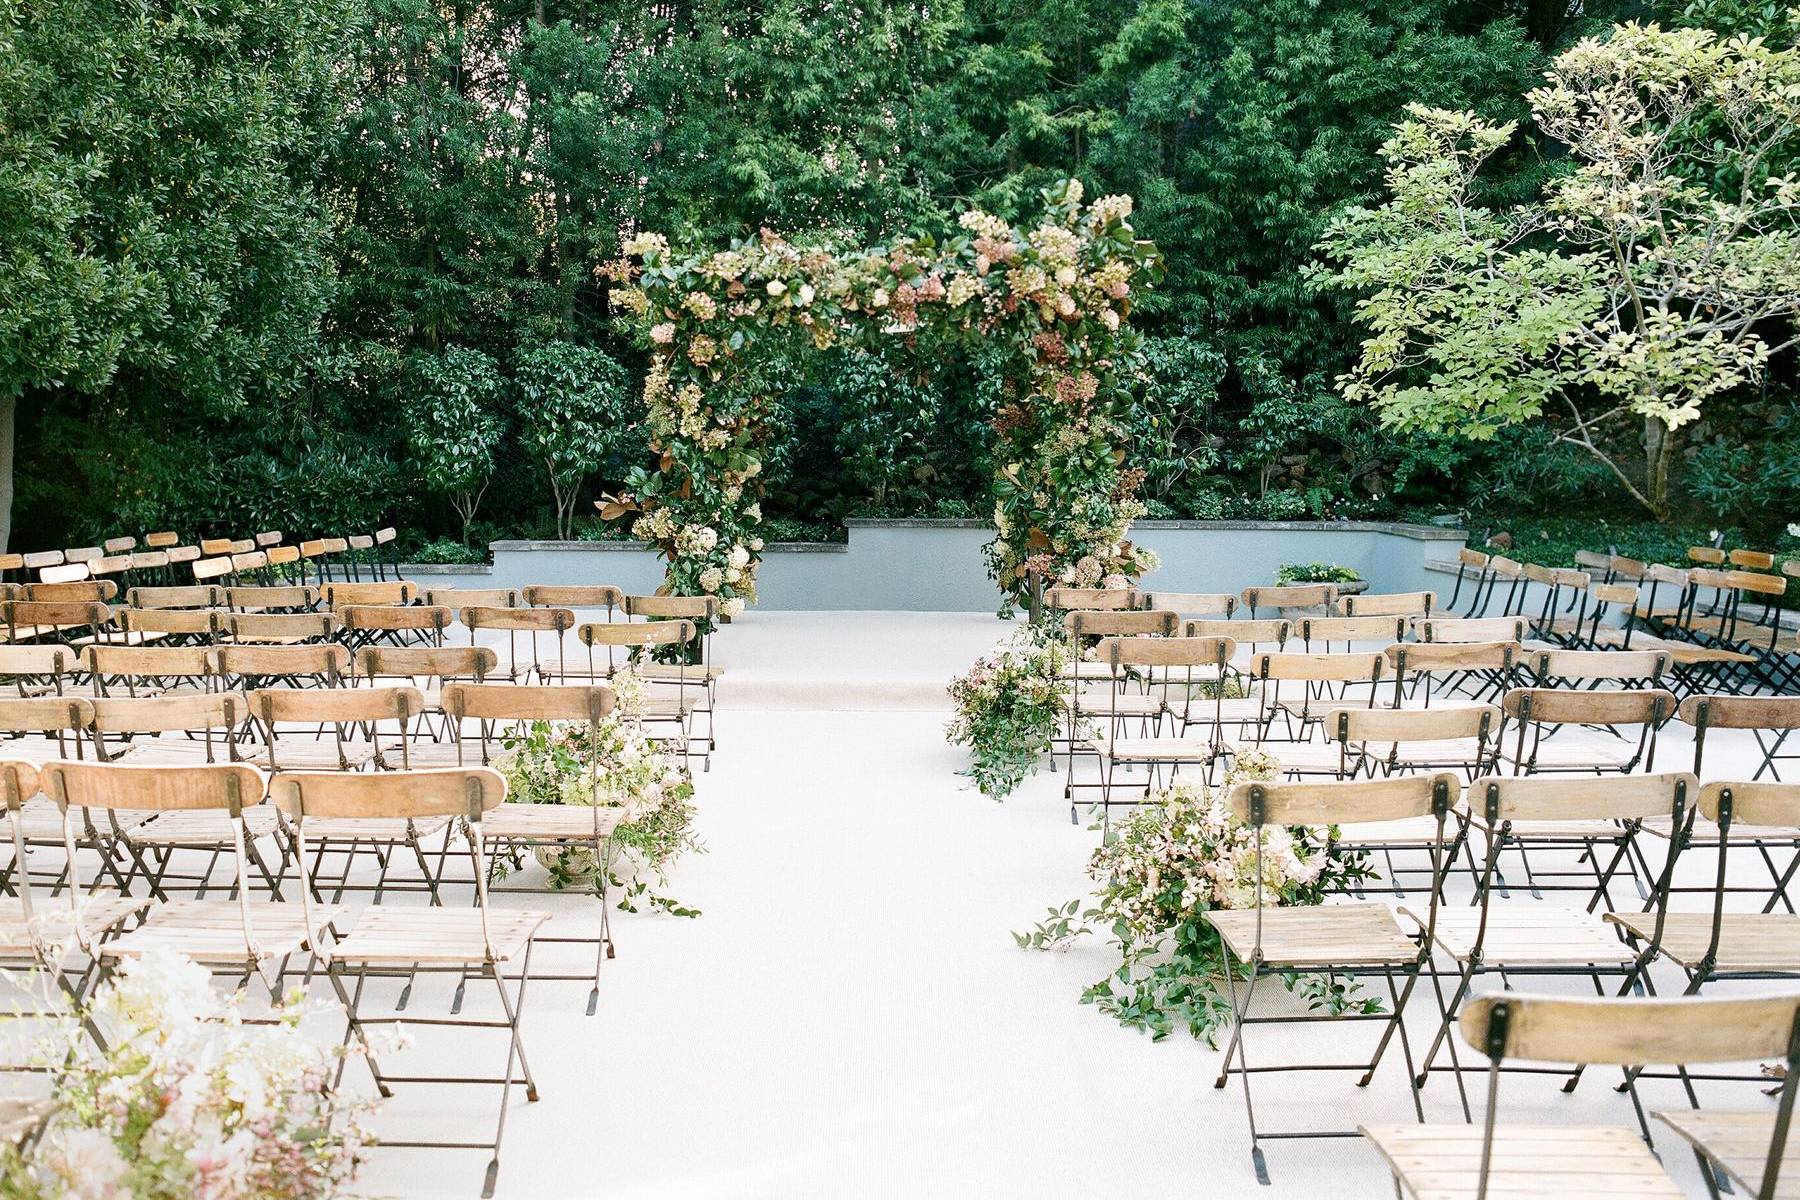 Wedding Ceremony Seating Configuration: Top 10